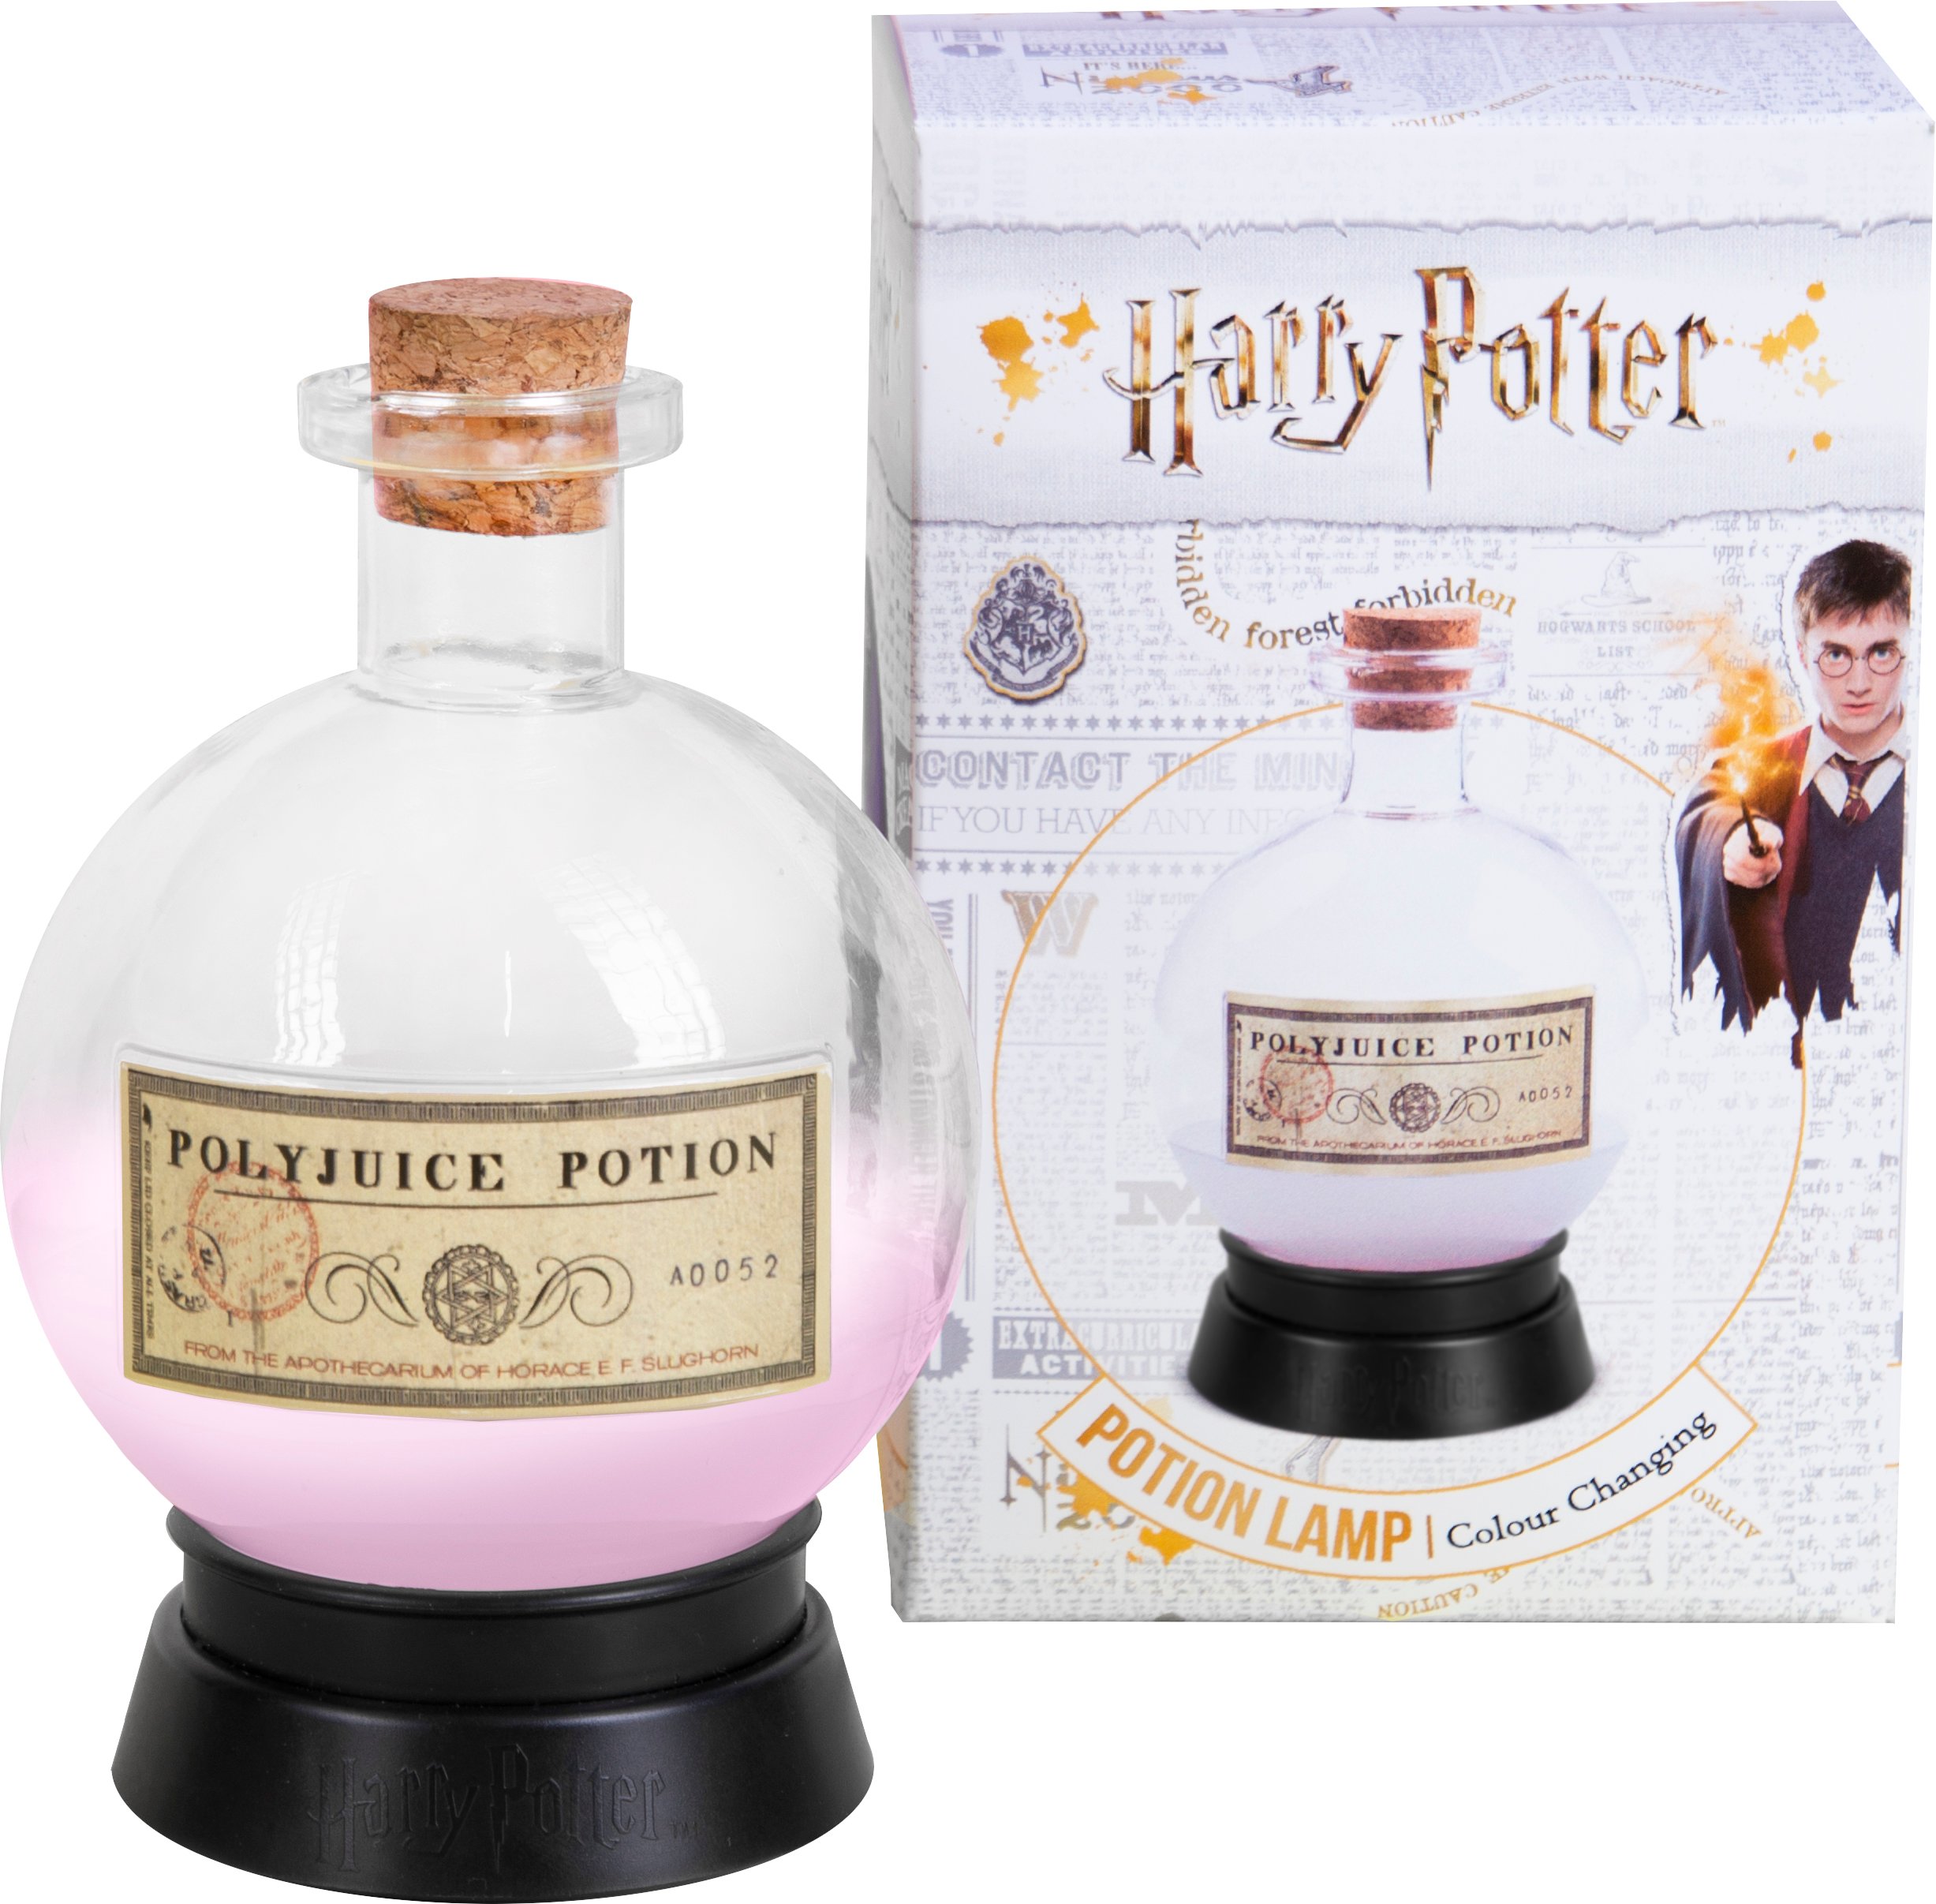 Harry Potter Potion Lamp - Gadgets